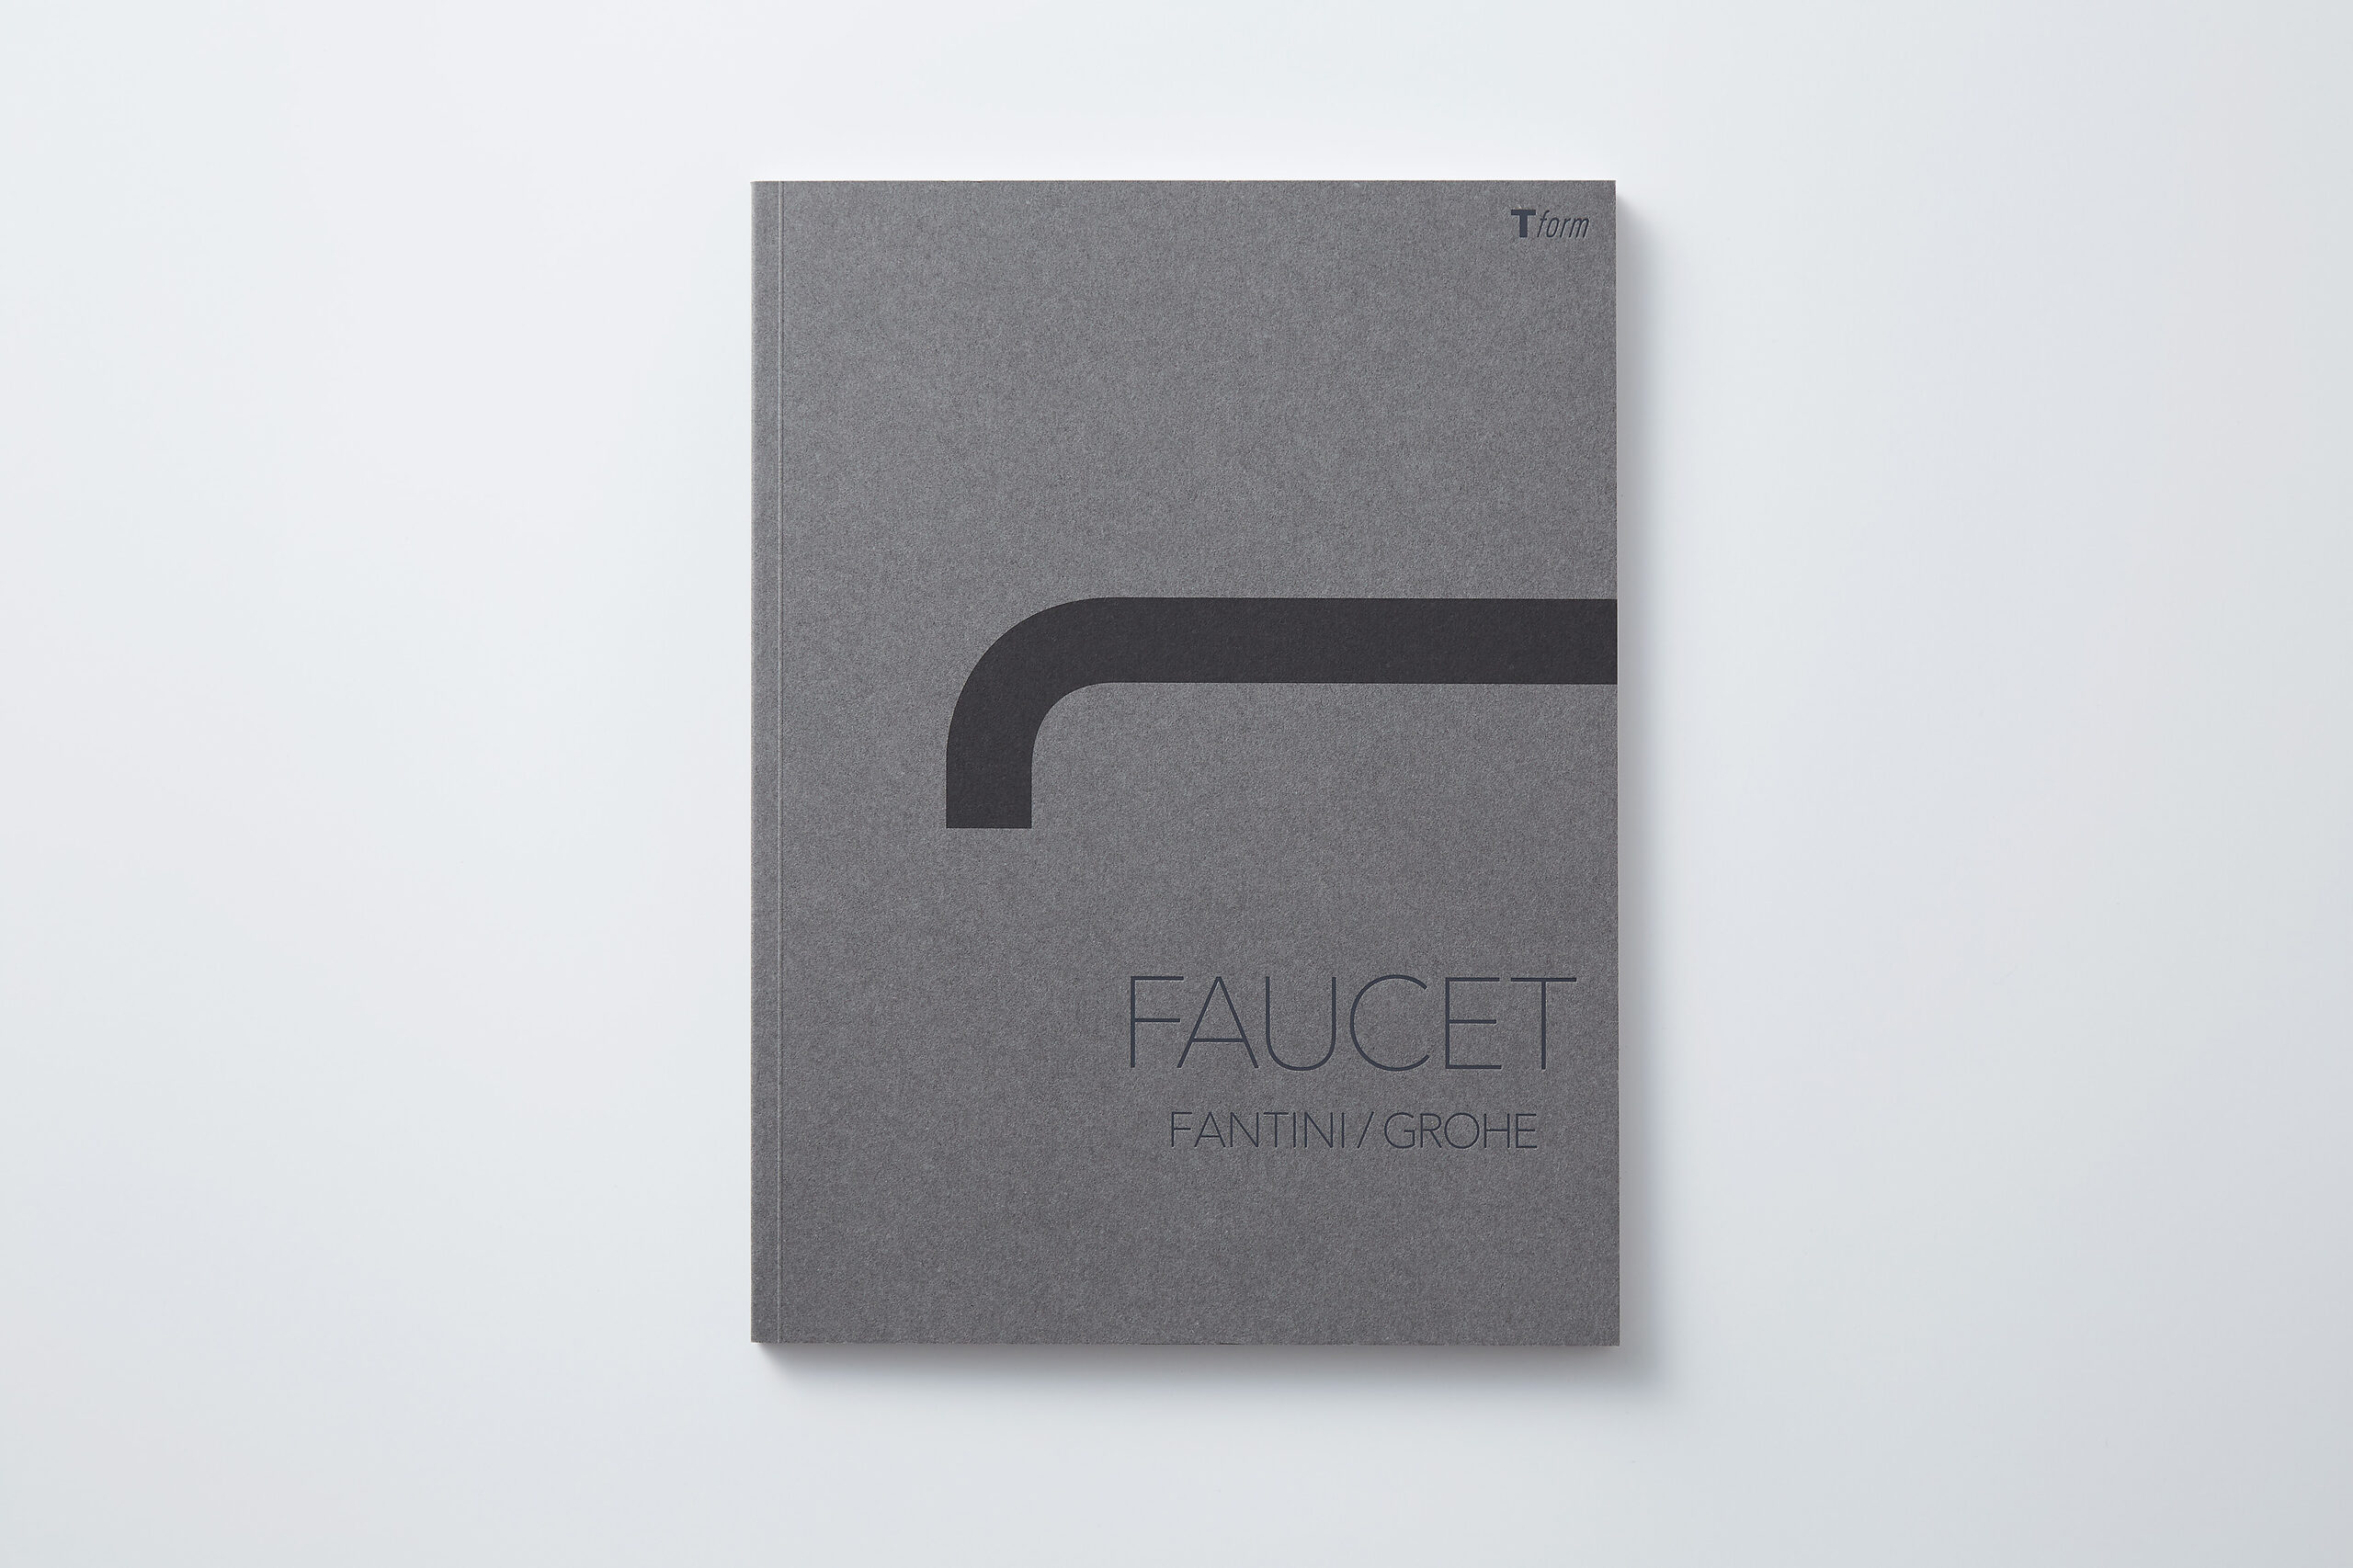 Tform Faucet Catalogue